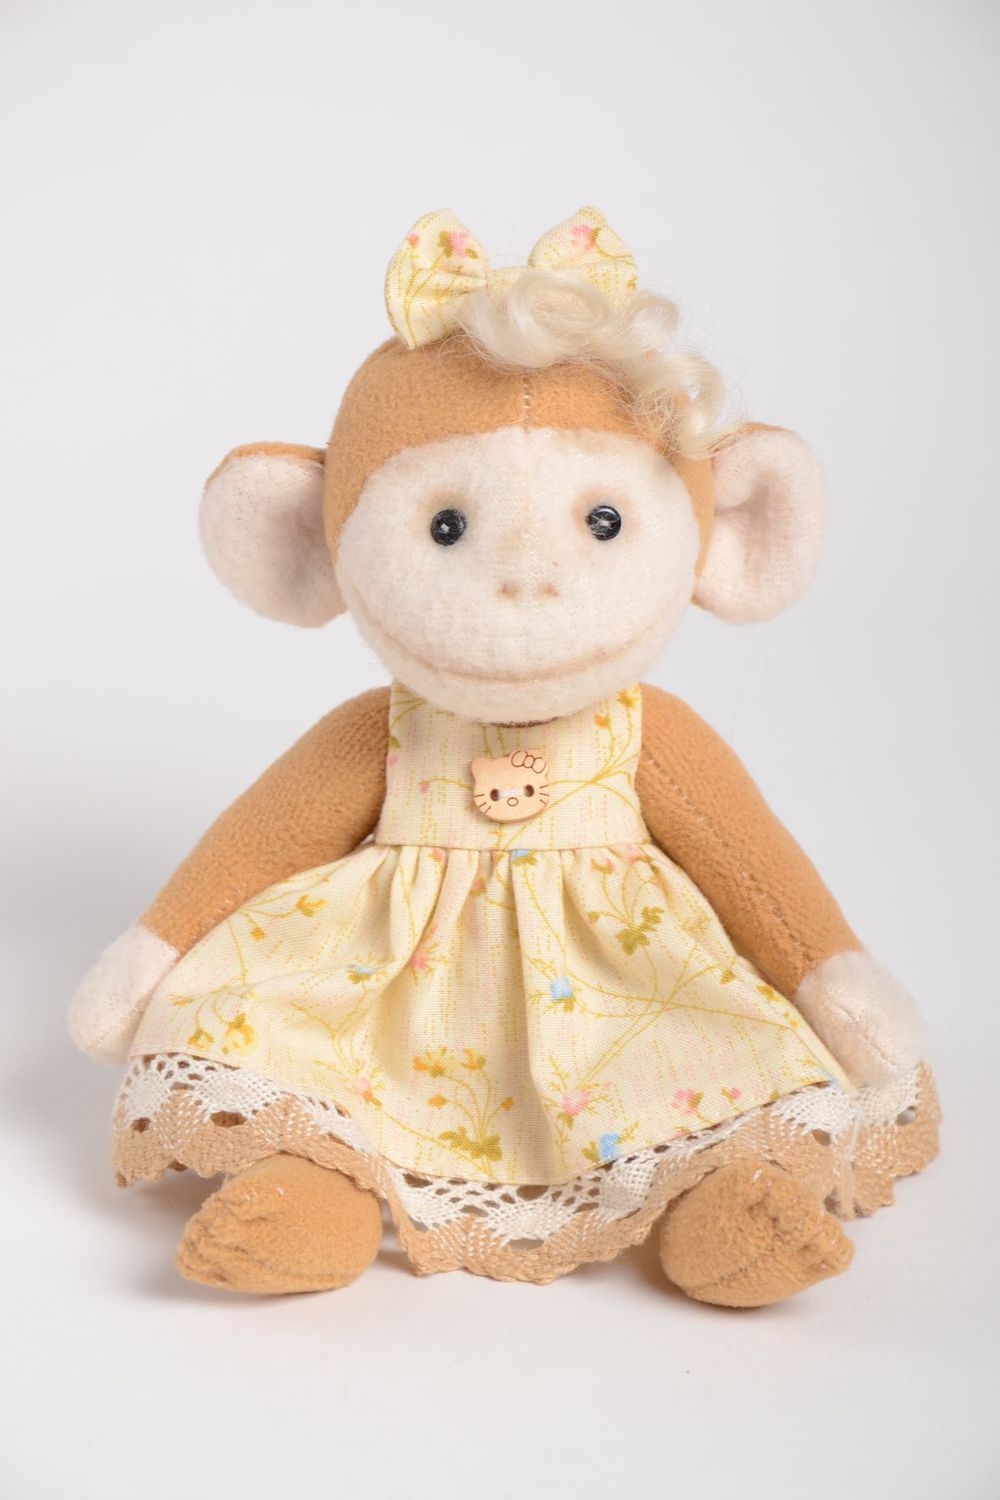 Handmade soft toy monkey stuffed toy for children interior decor ideas photo 2